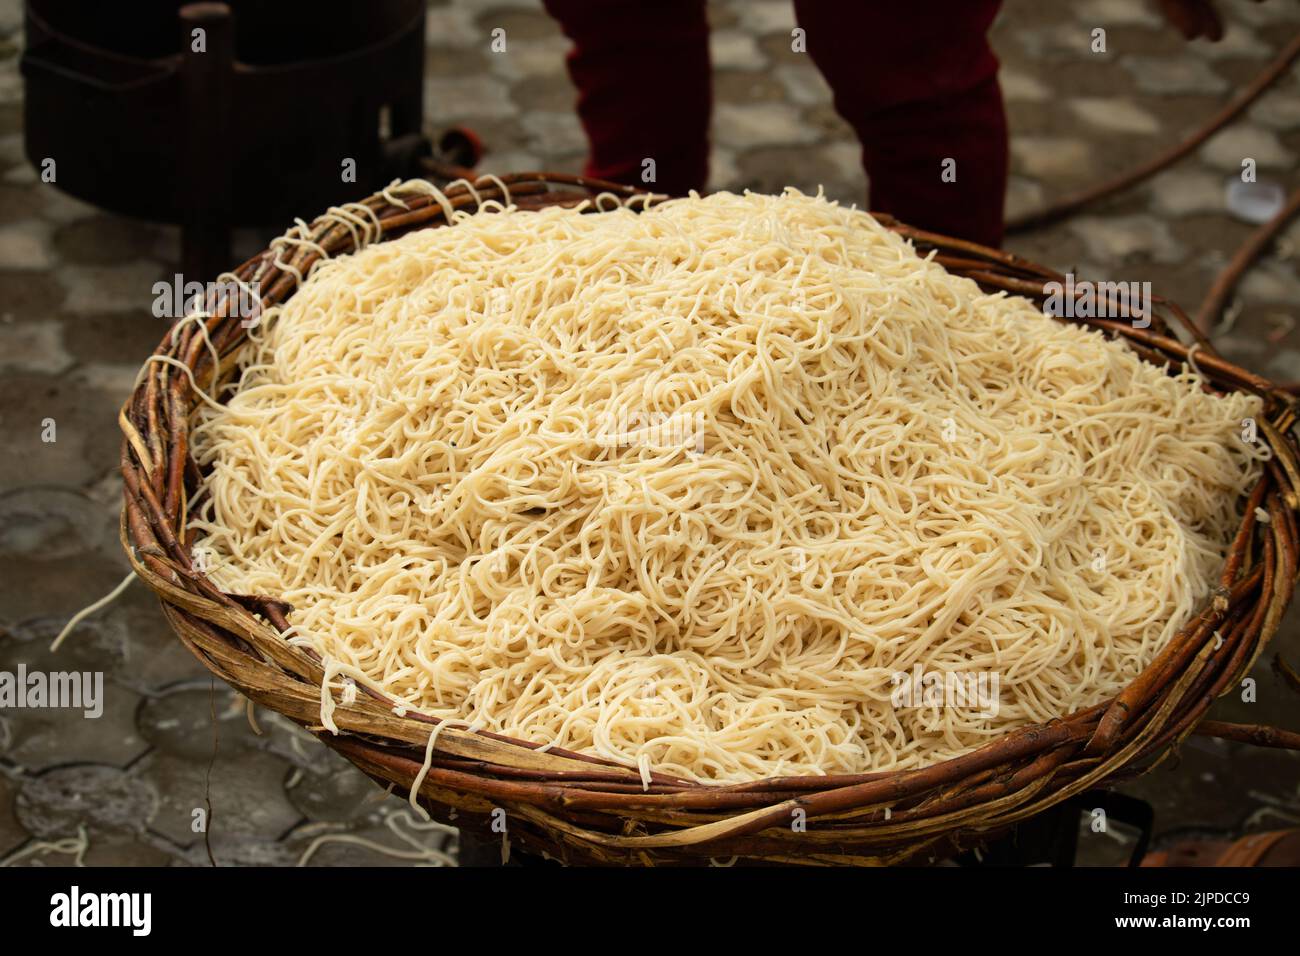 Cinese Schezwan anche chiamato Szechwan Veg Hakka Noodles Chowmin o Indian Veg Chow Mein essere lavato sciacquato in acqua in bambù Basket. Stile dhaba Foto Stock